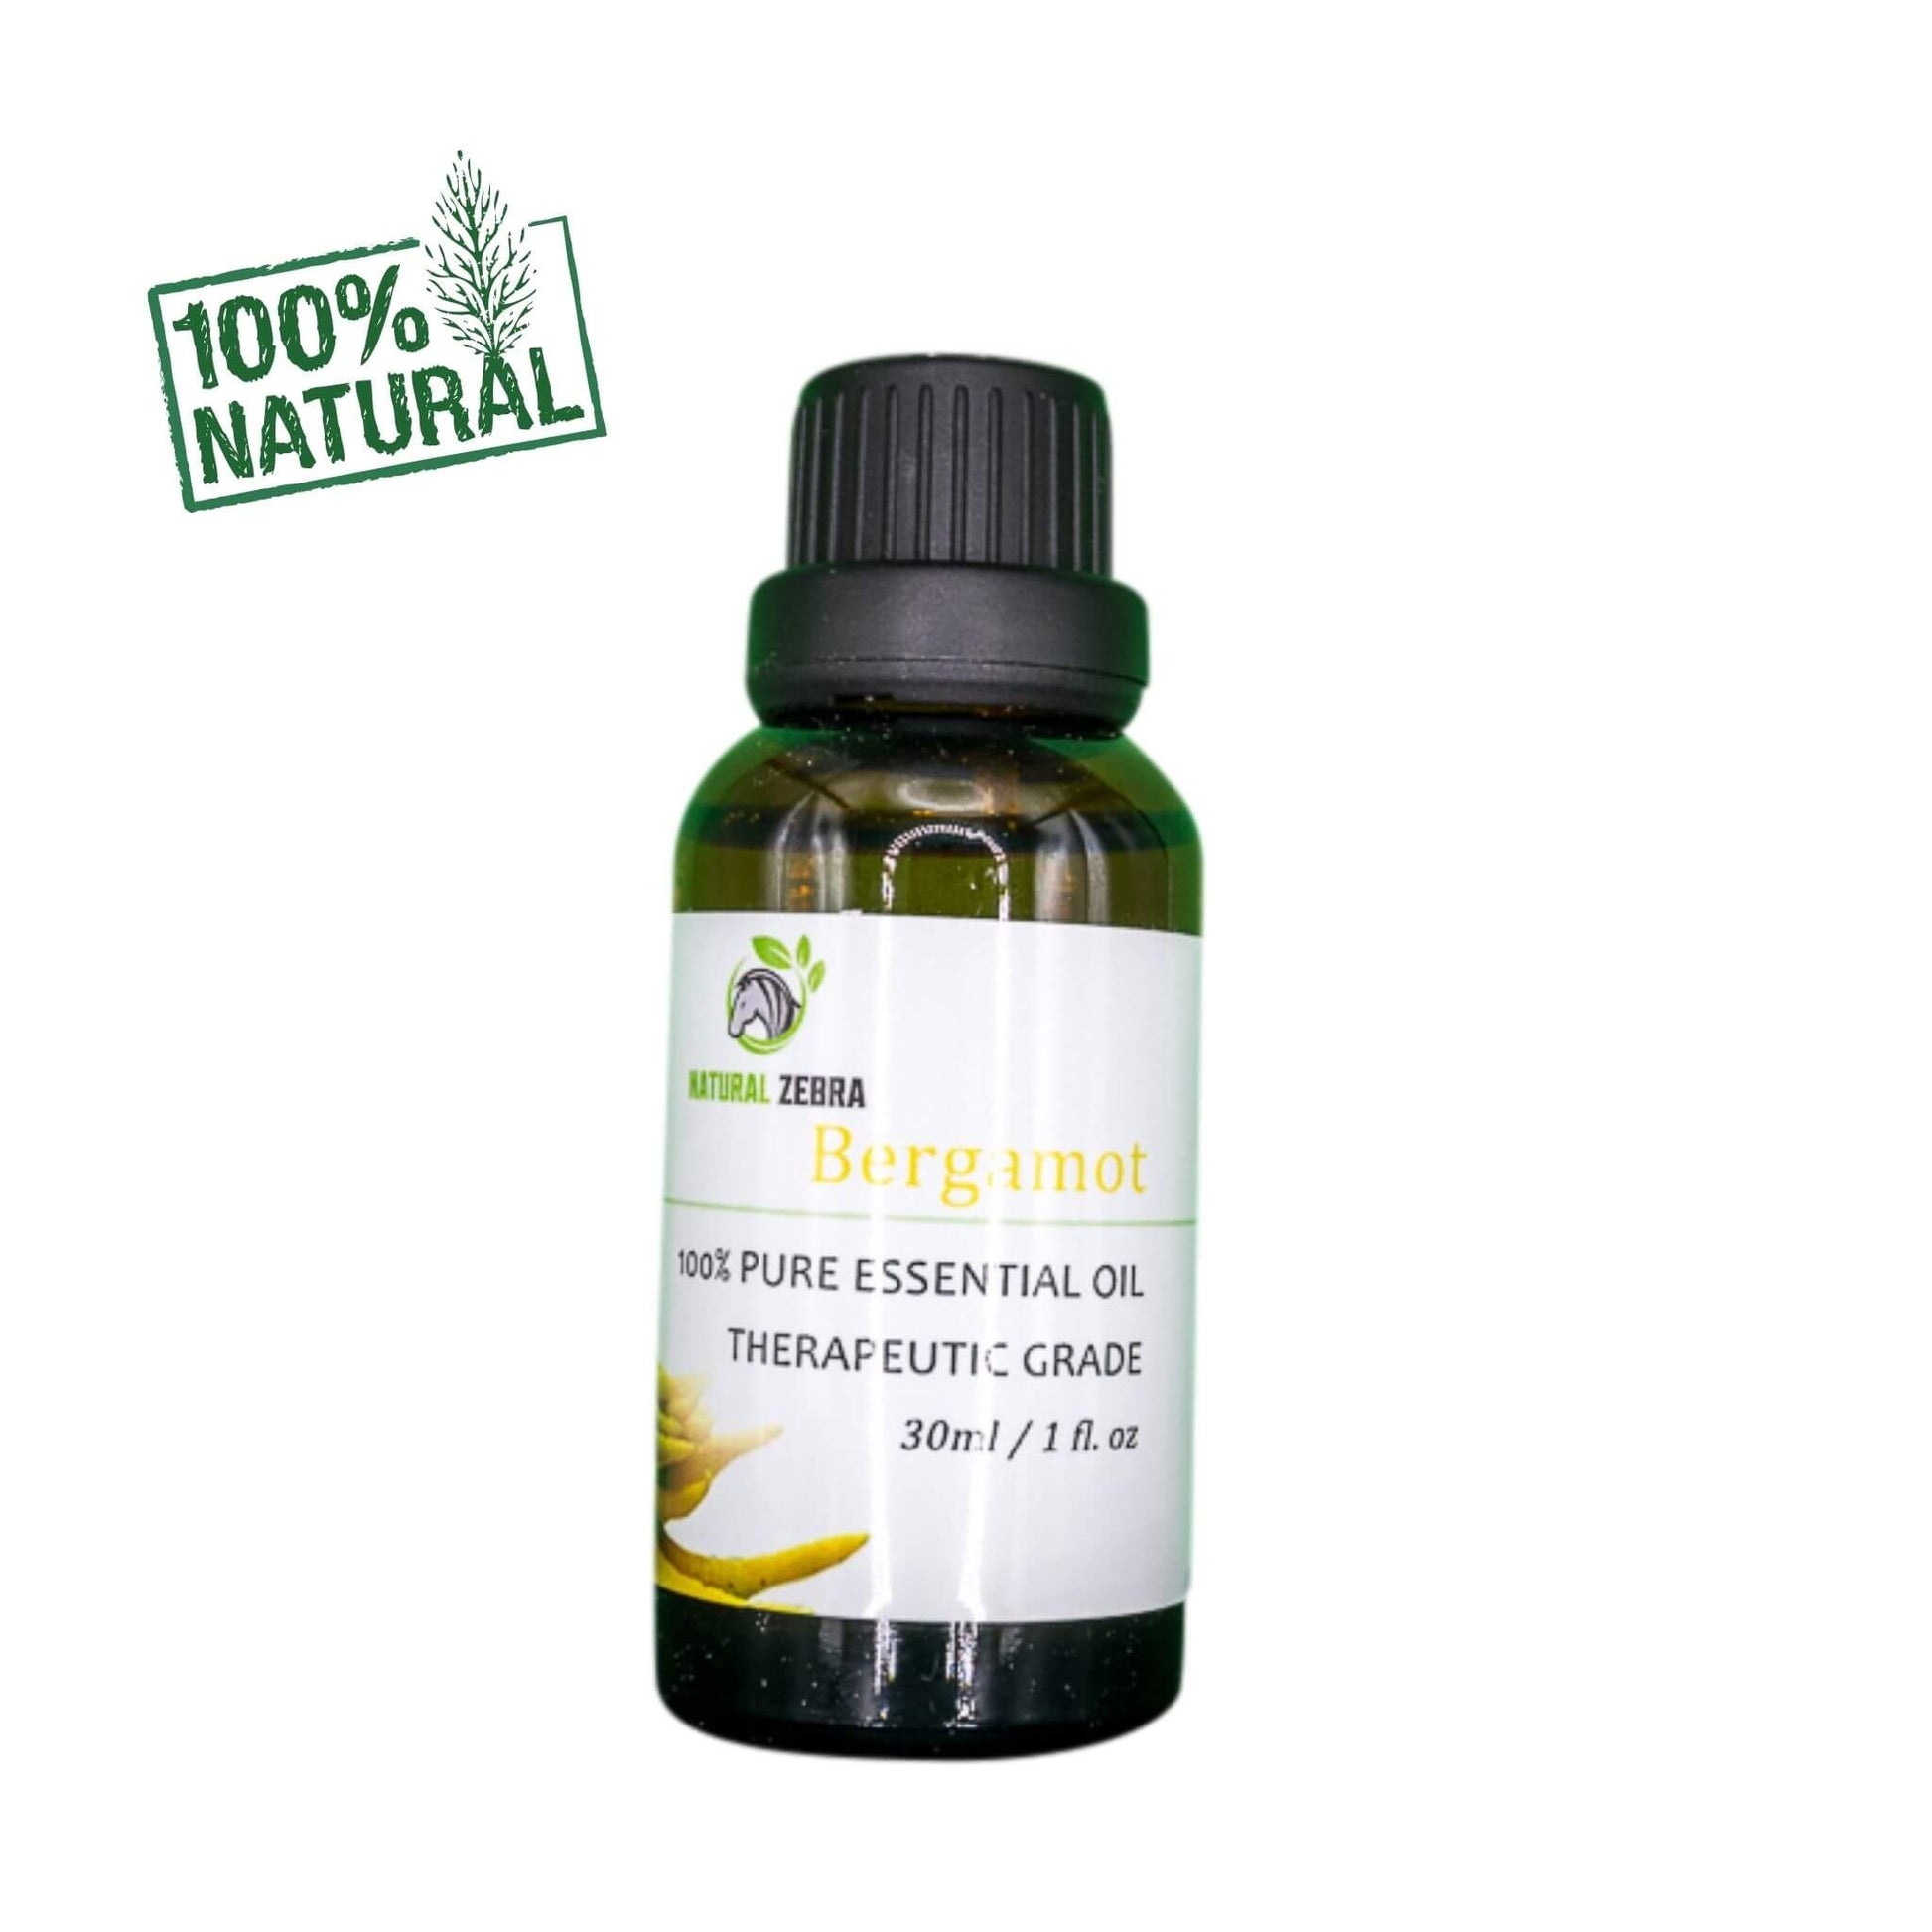 NATURAL ZEBRA | Bergamot Essential Oil - 30 ml / 1 fl.oz